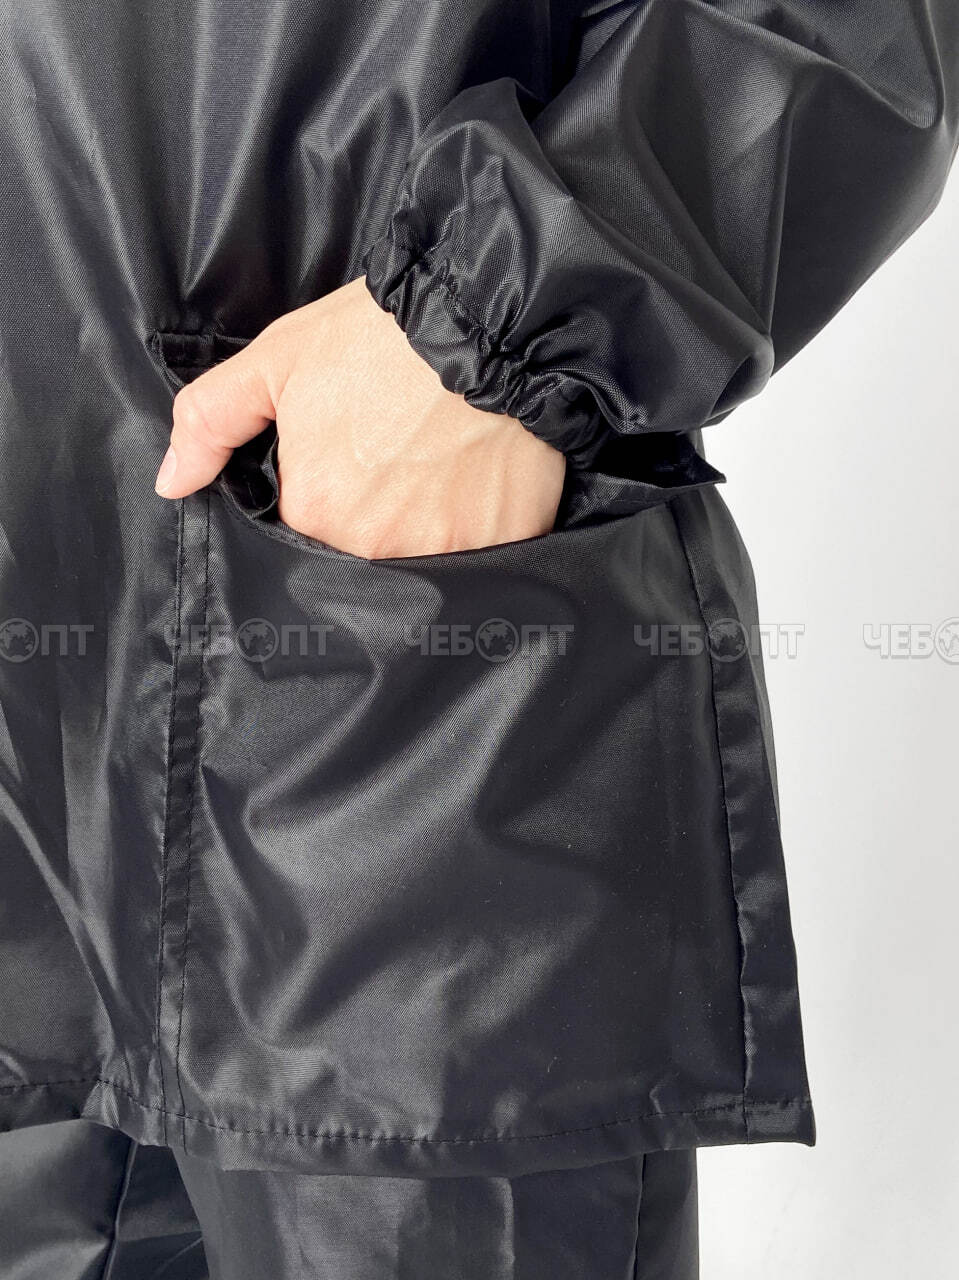 Костюм-дождевик (куртка, брюки),ЧЕБПРО,размер 52-54,100% полиэстер, Арт. ДожКостМуж/черный, МПС [15] СобПр. ЧЕБОПТ.